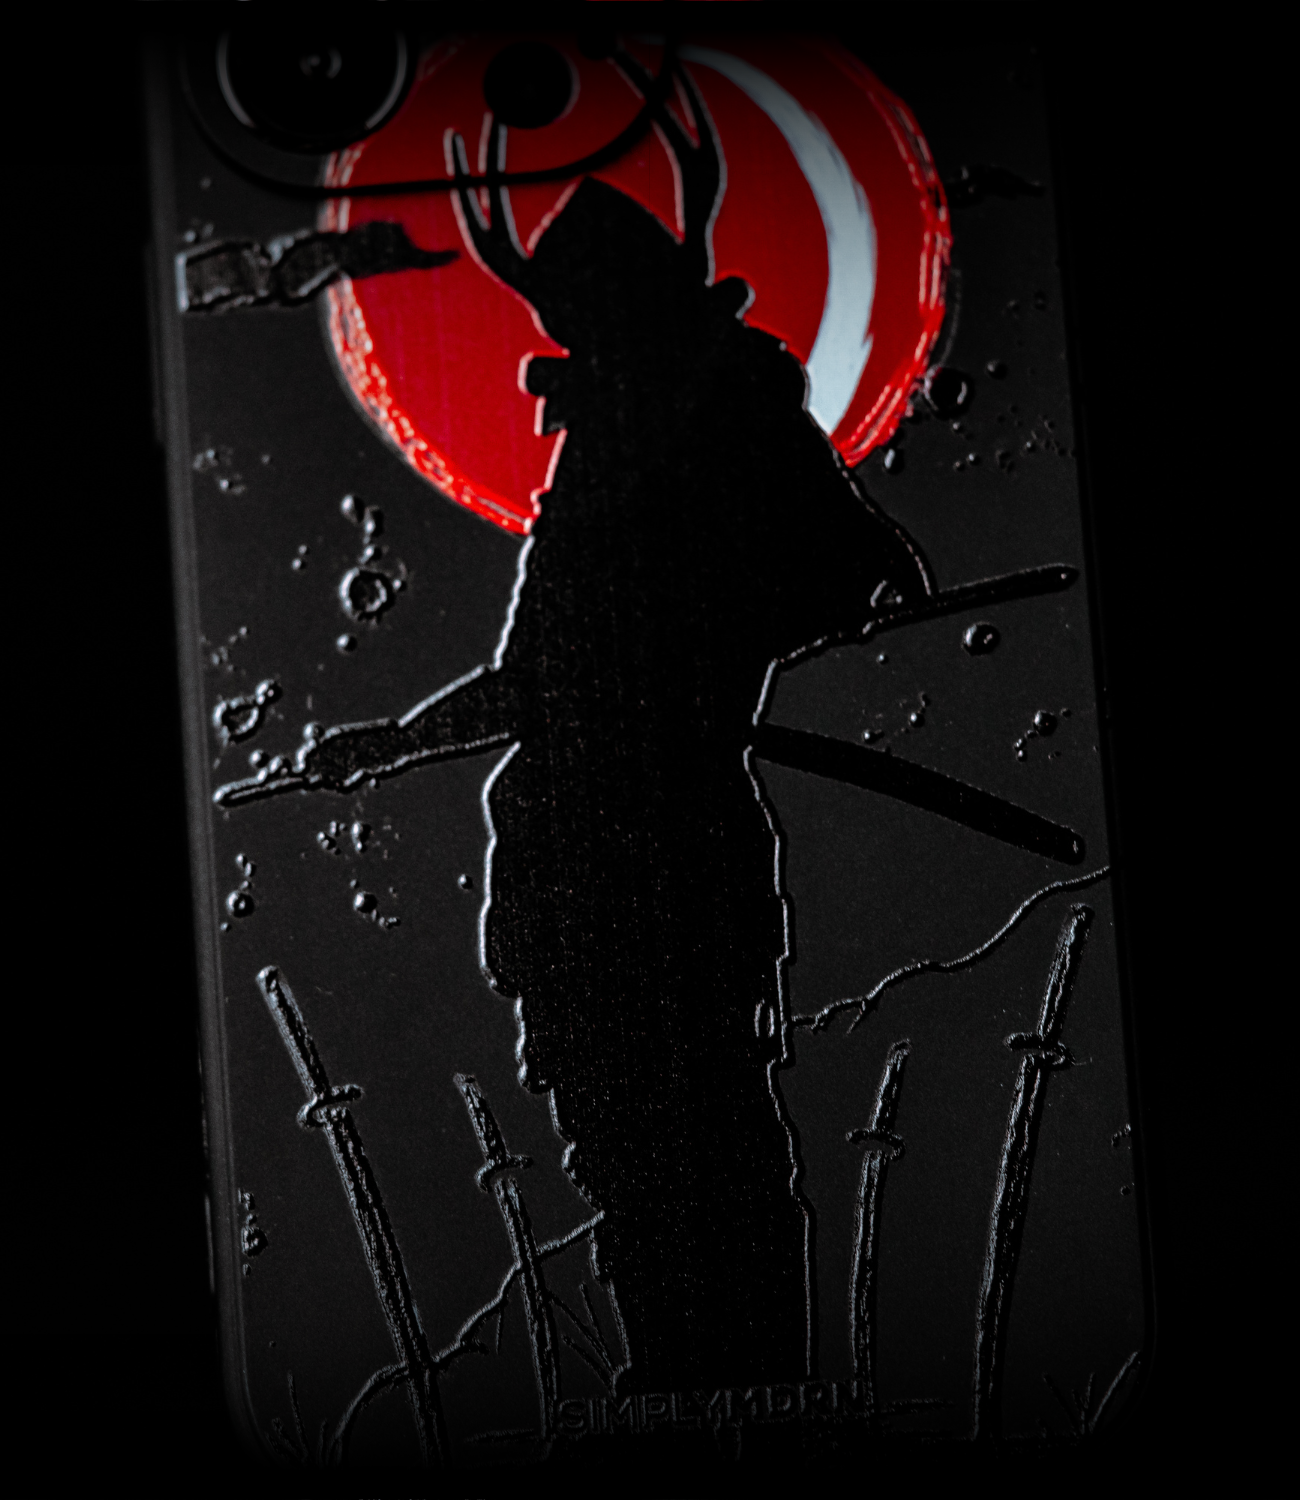 Samurai Mando iPhone Case for Sale by Fawl3r